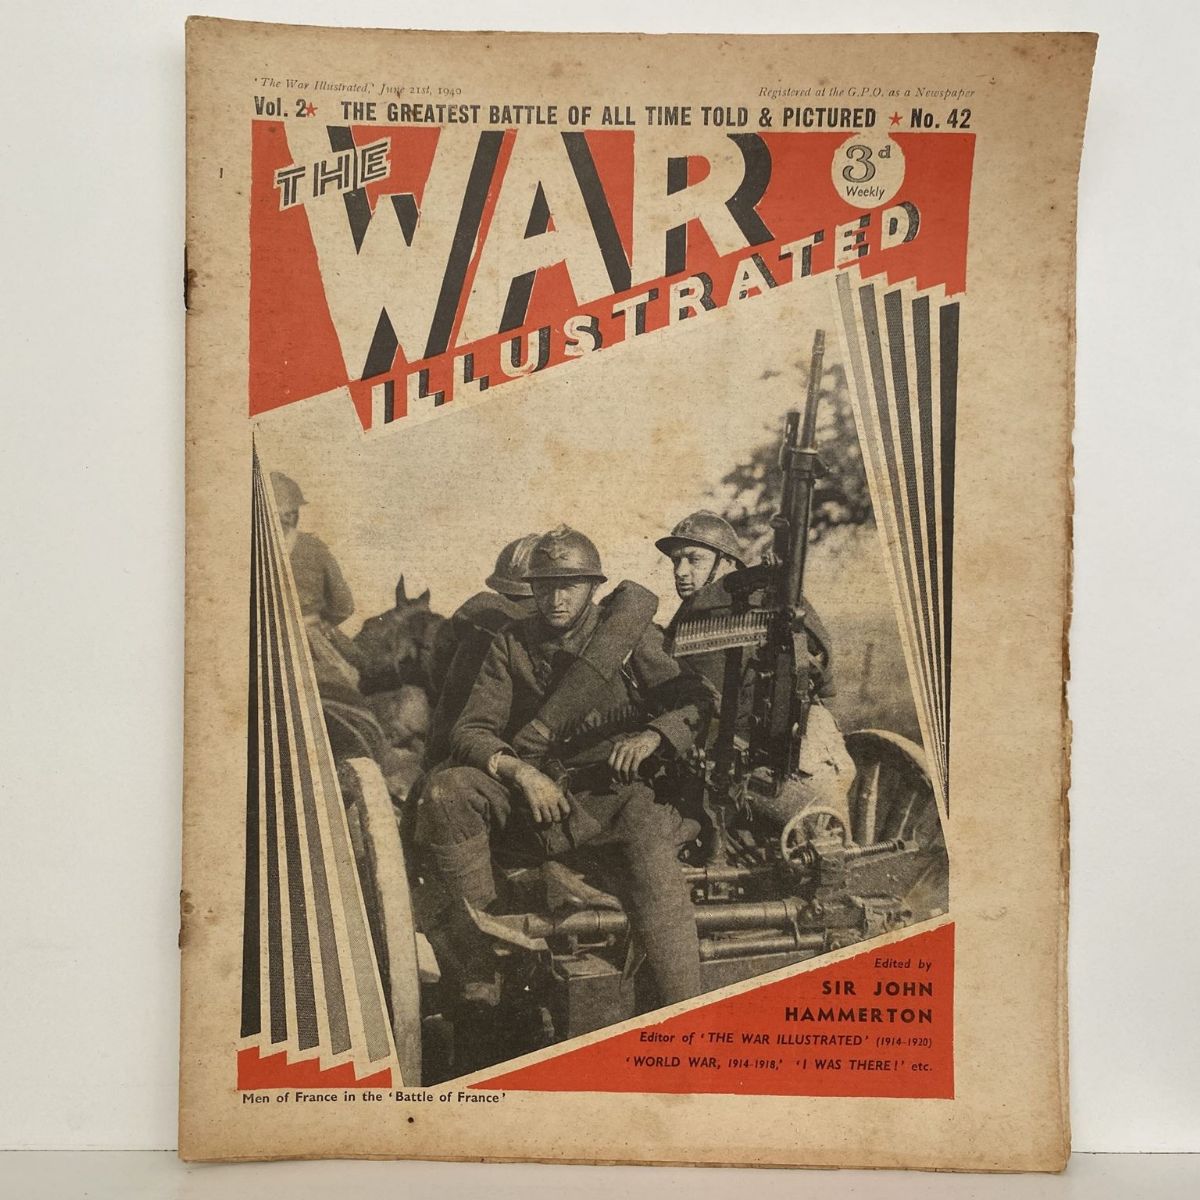 THE WAR ILLUSTRATED - Vol 2, No 42, 21st June 1940